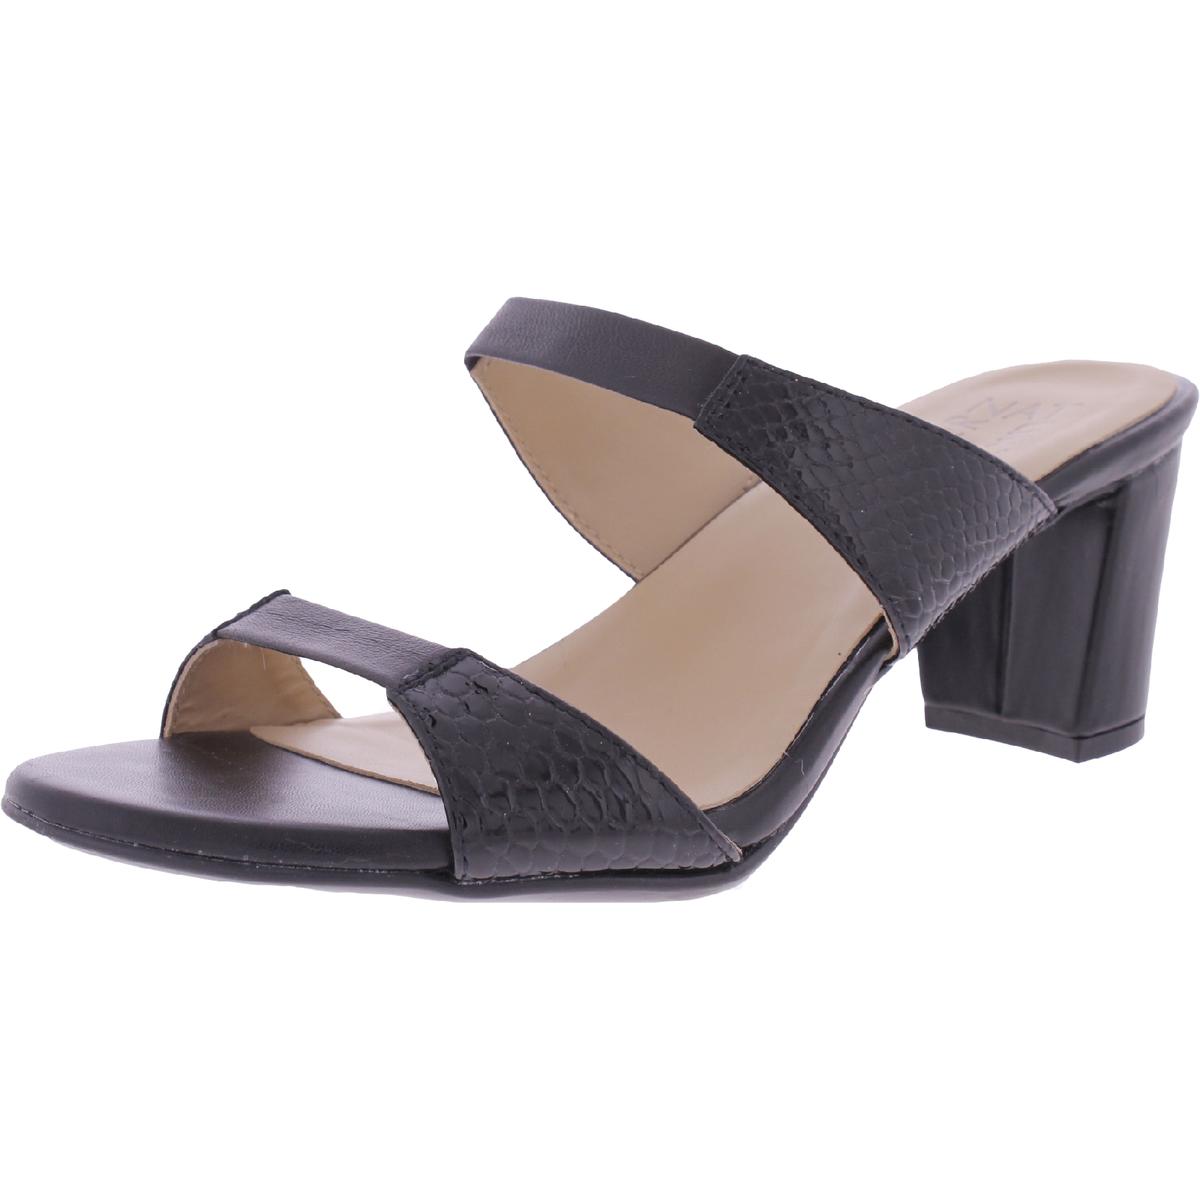 Naturalizer Womens Slide Slip On Heels Shoes BHFO 5571 | eBay